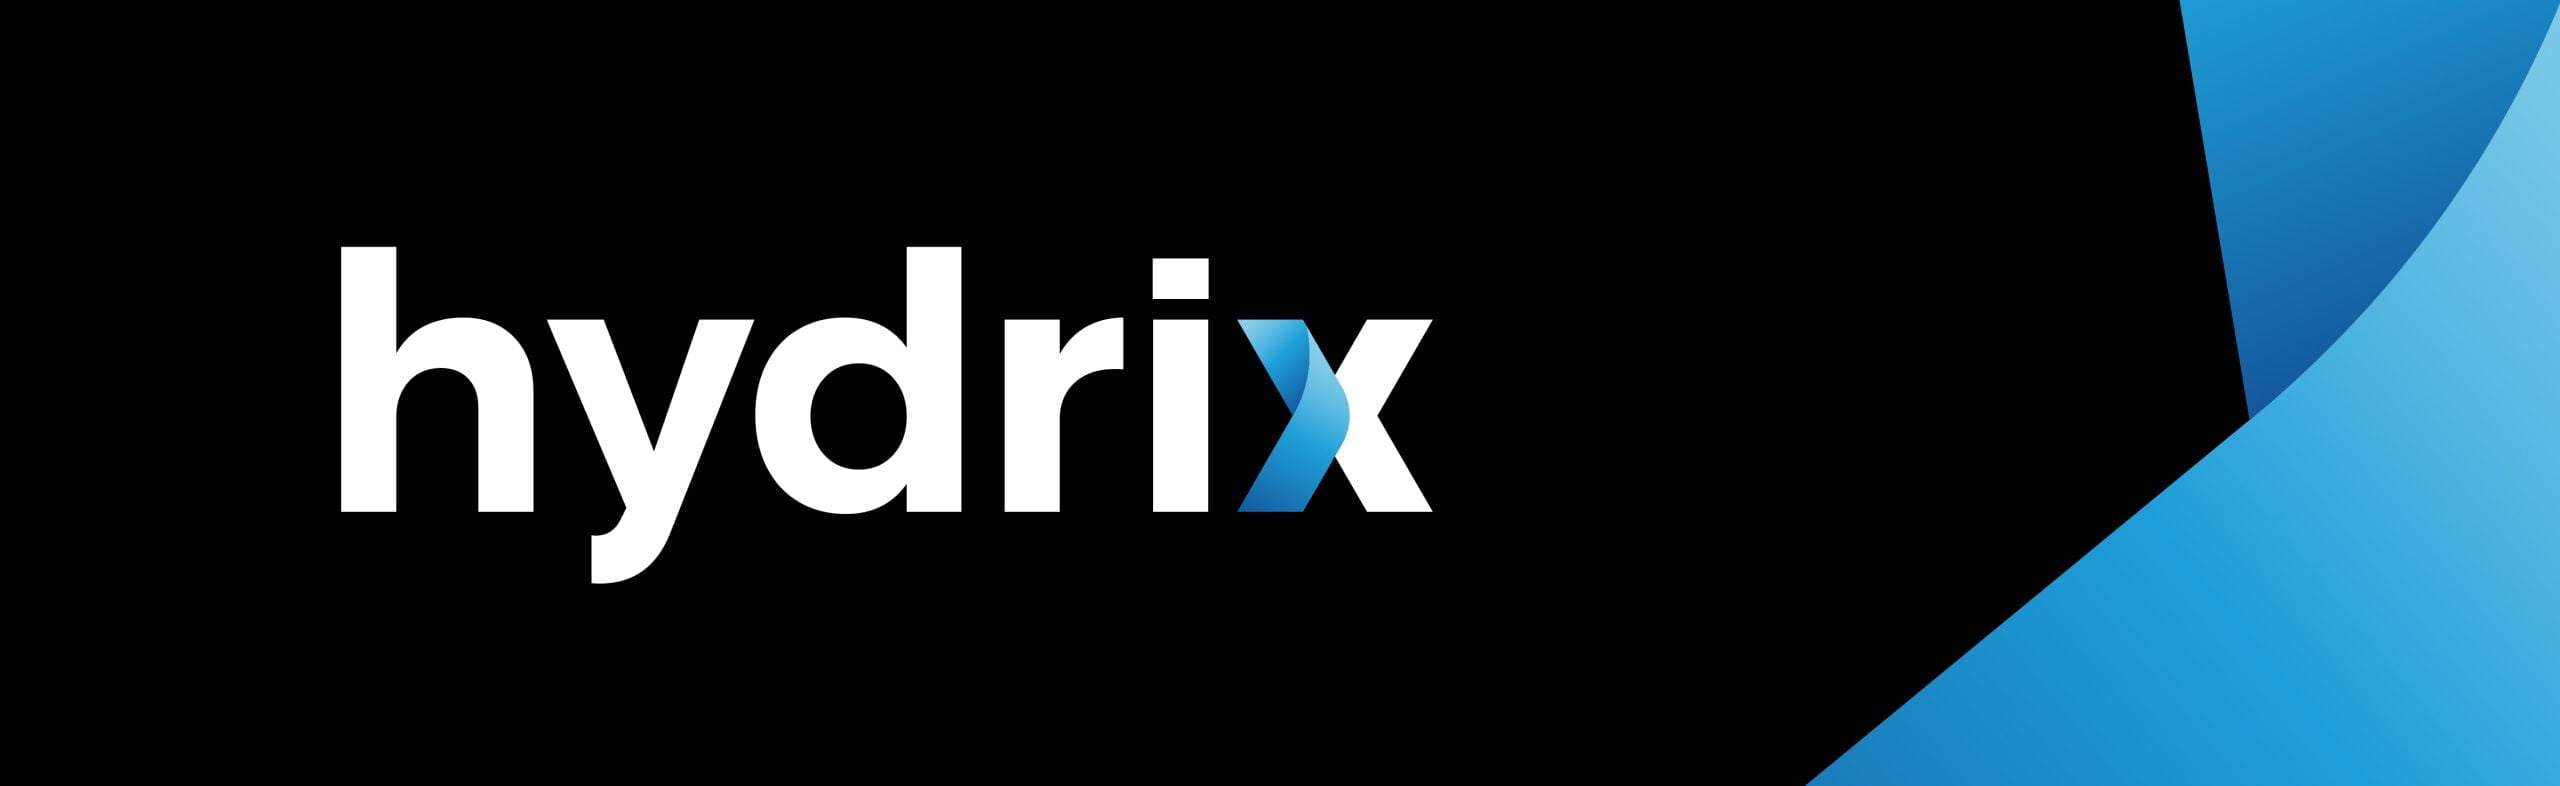 Hydrix New Brand.4